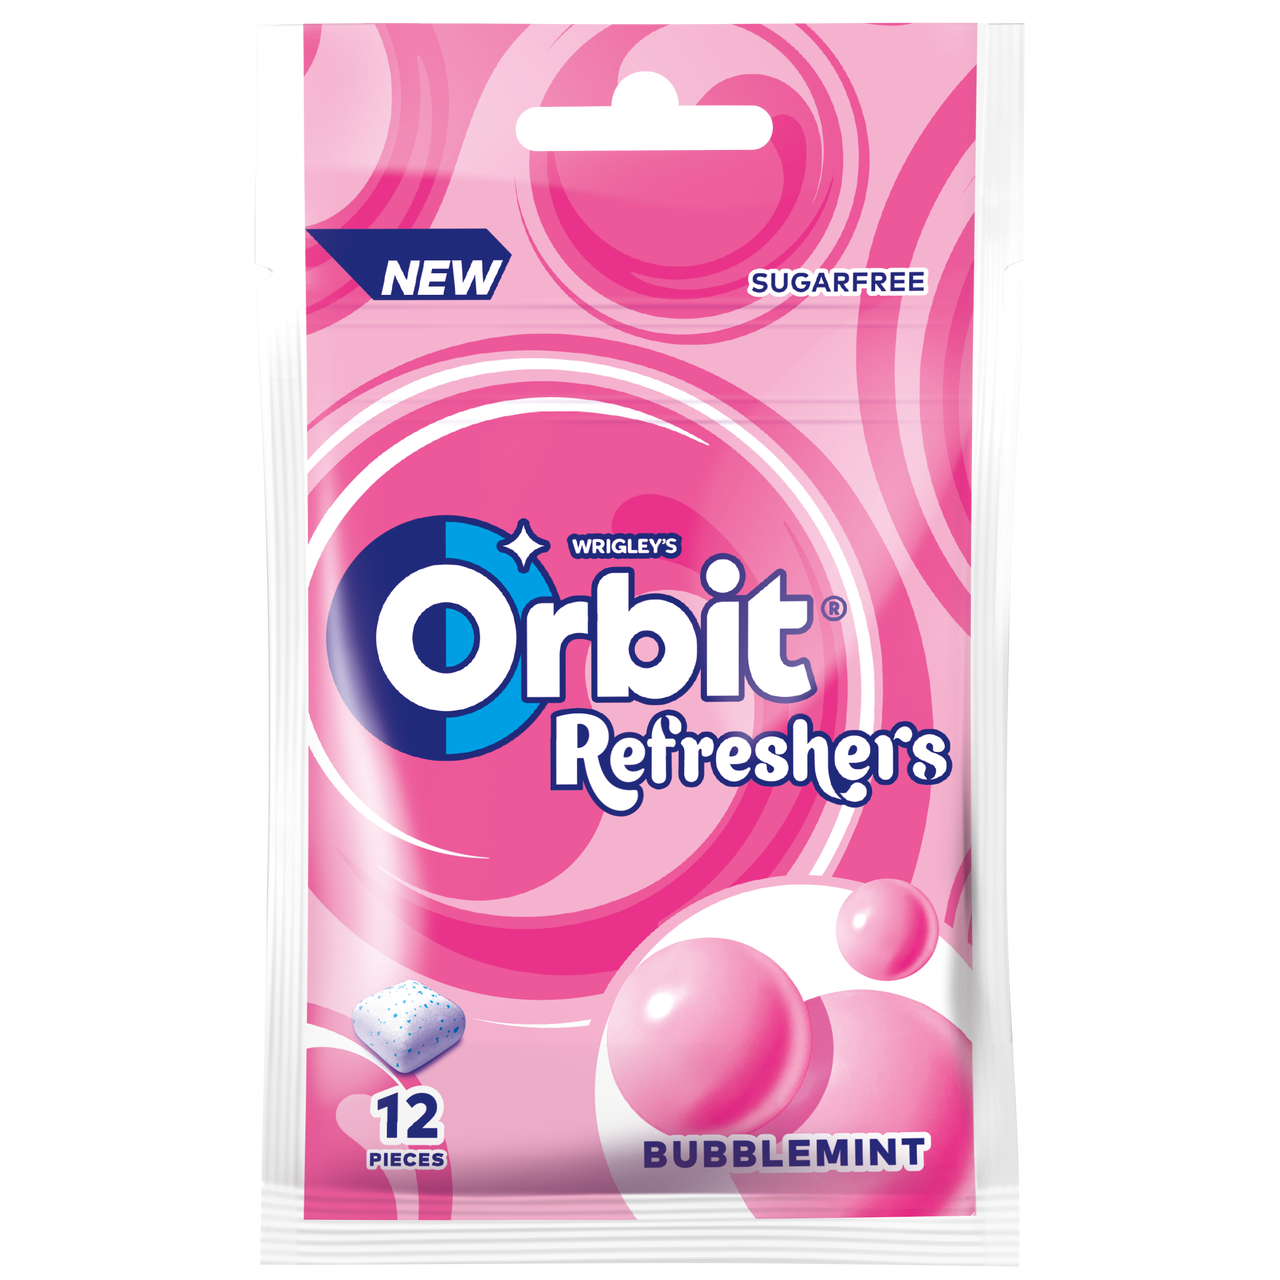 Orbit® Refreshers Bubblemint
Gramatura: 26 g